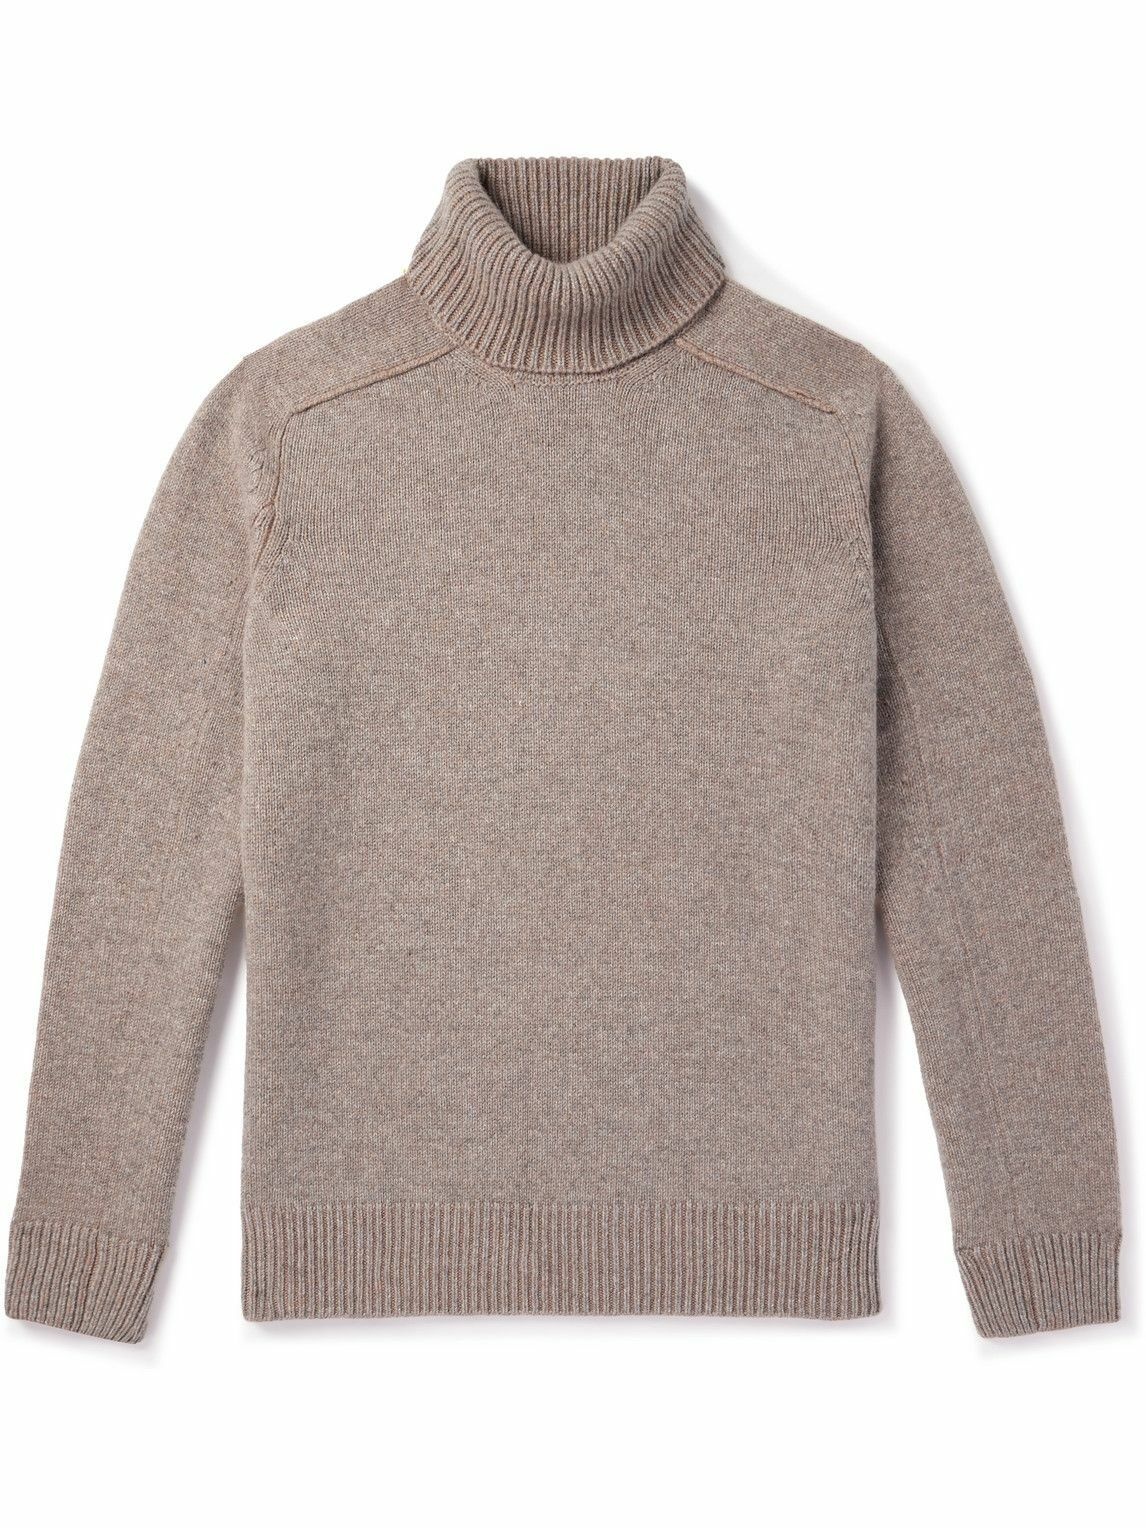 Zegna - Oasi Cashmere Rollneck Sweater - Brown Zegna